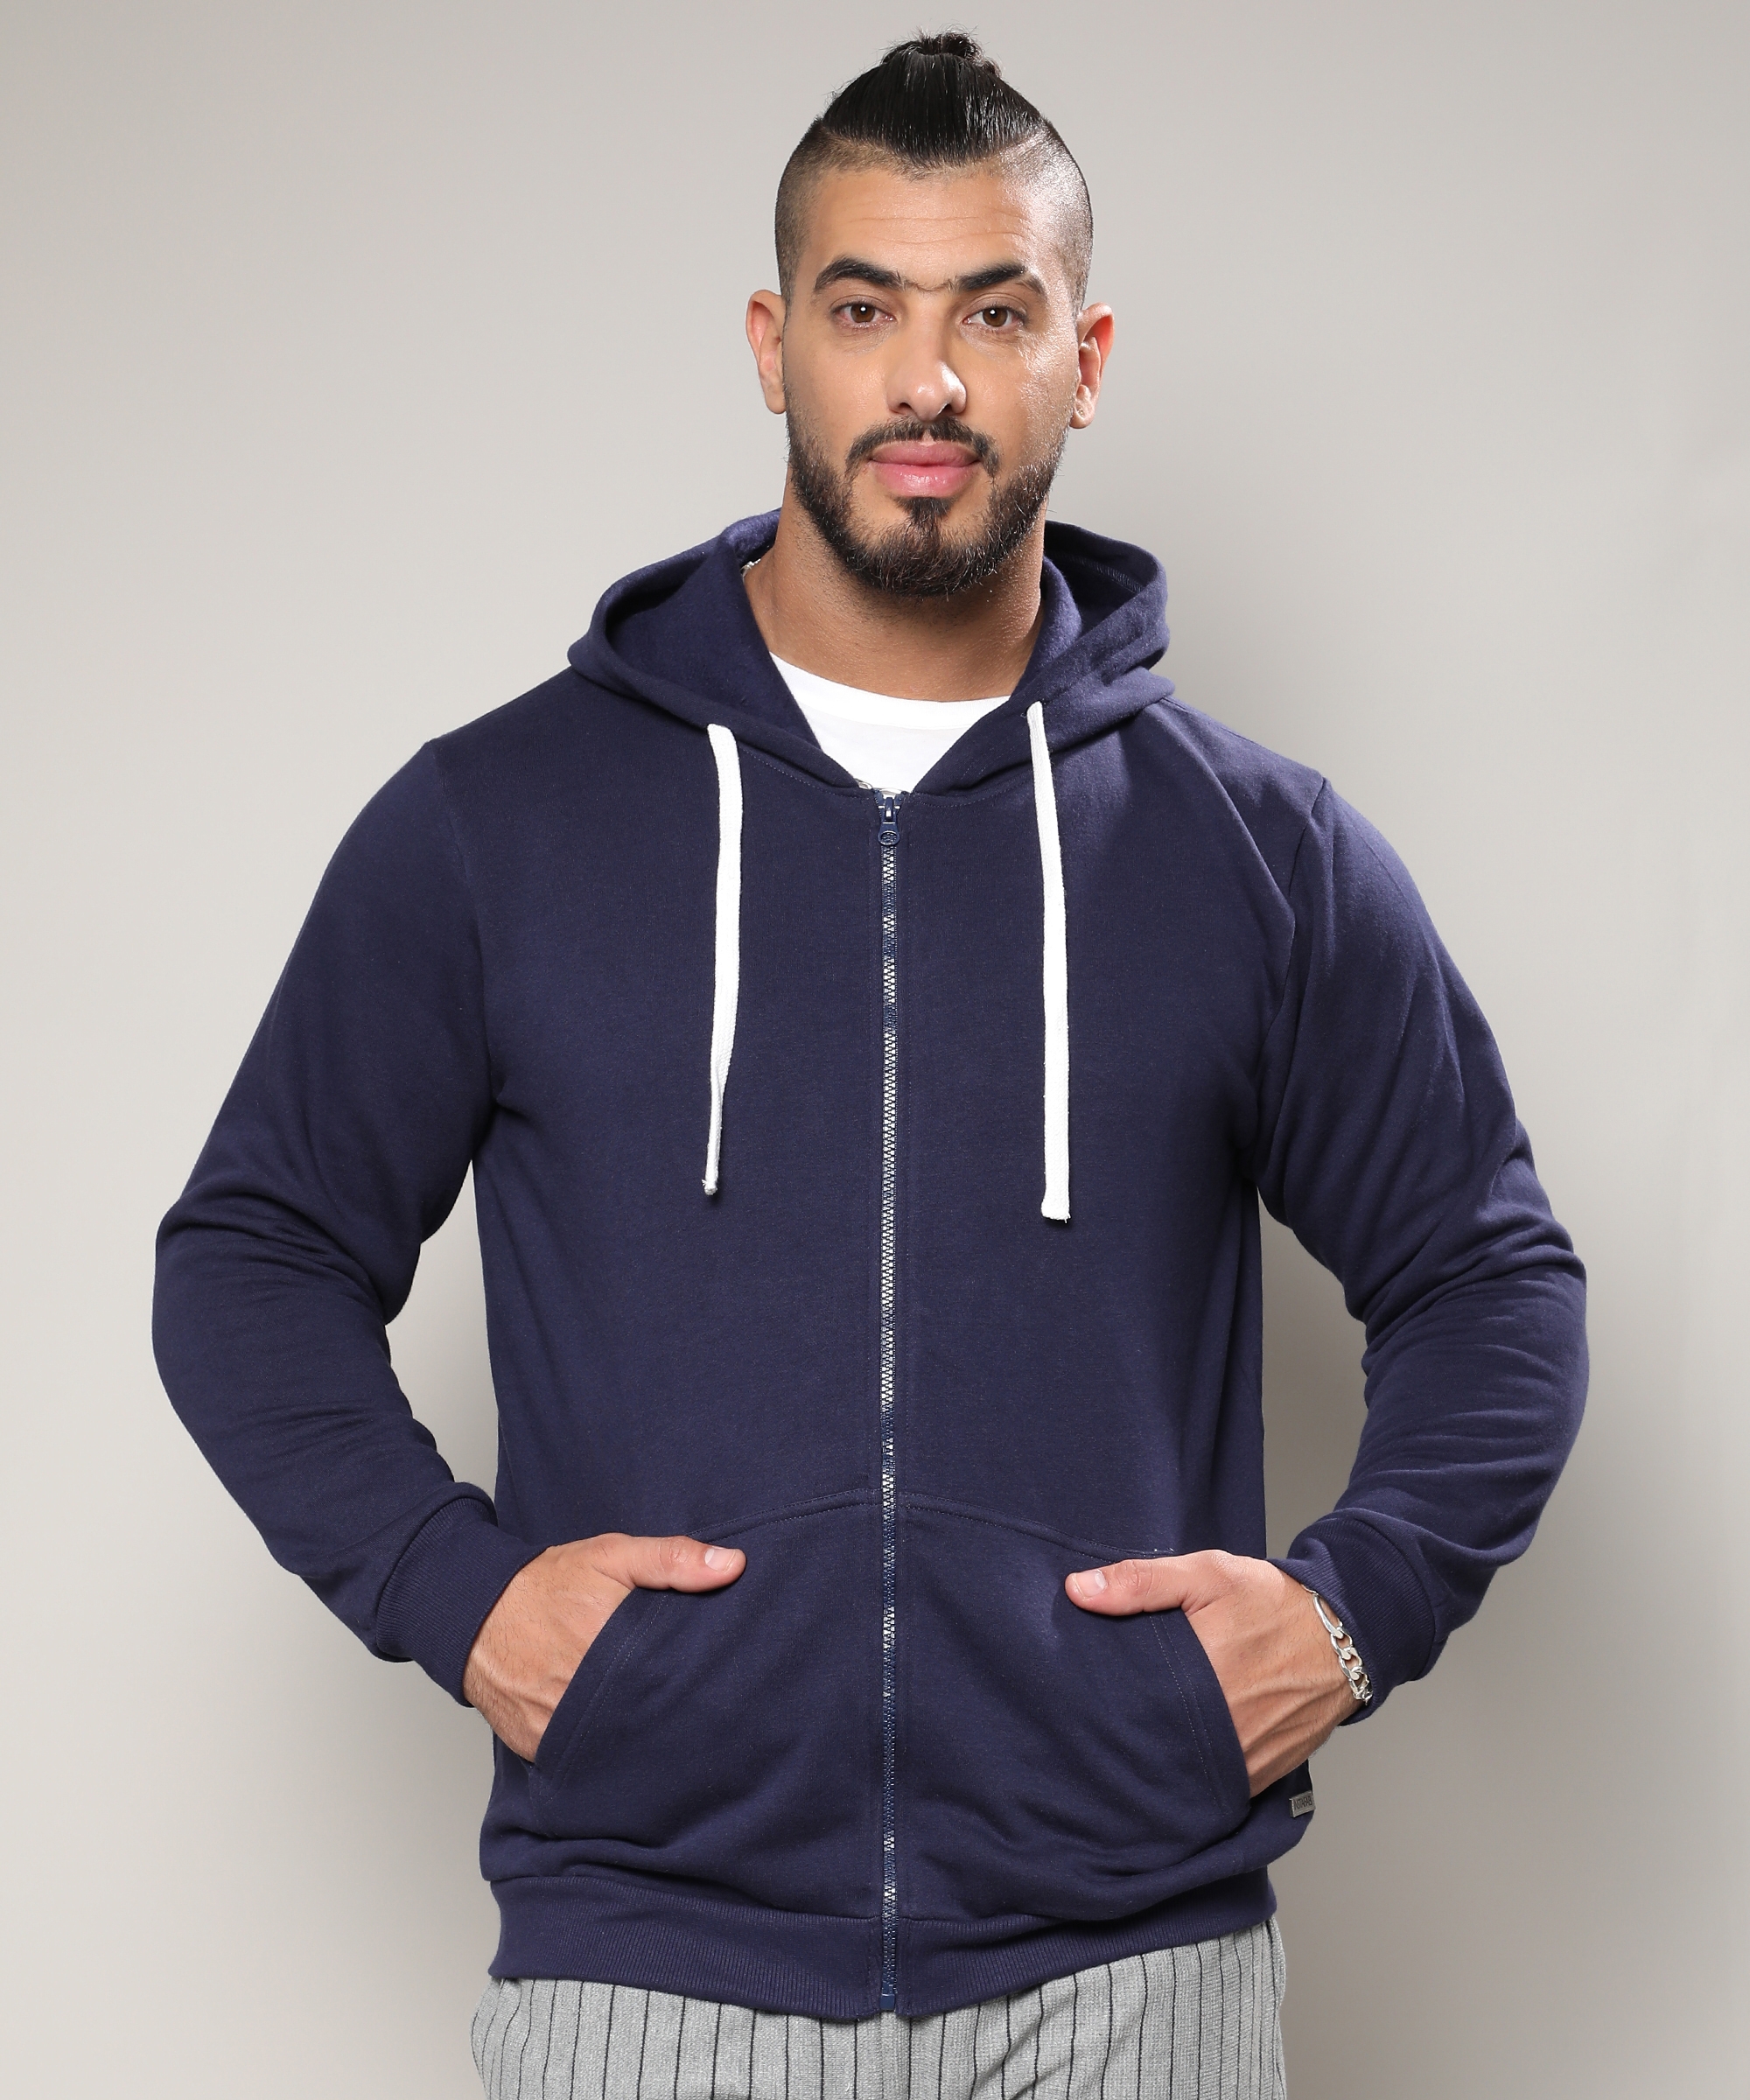 Instafab Plus | Men's Navy Blue Zip-Front Hoodie With Contrast Drawstring